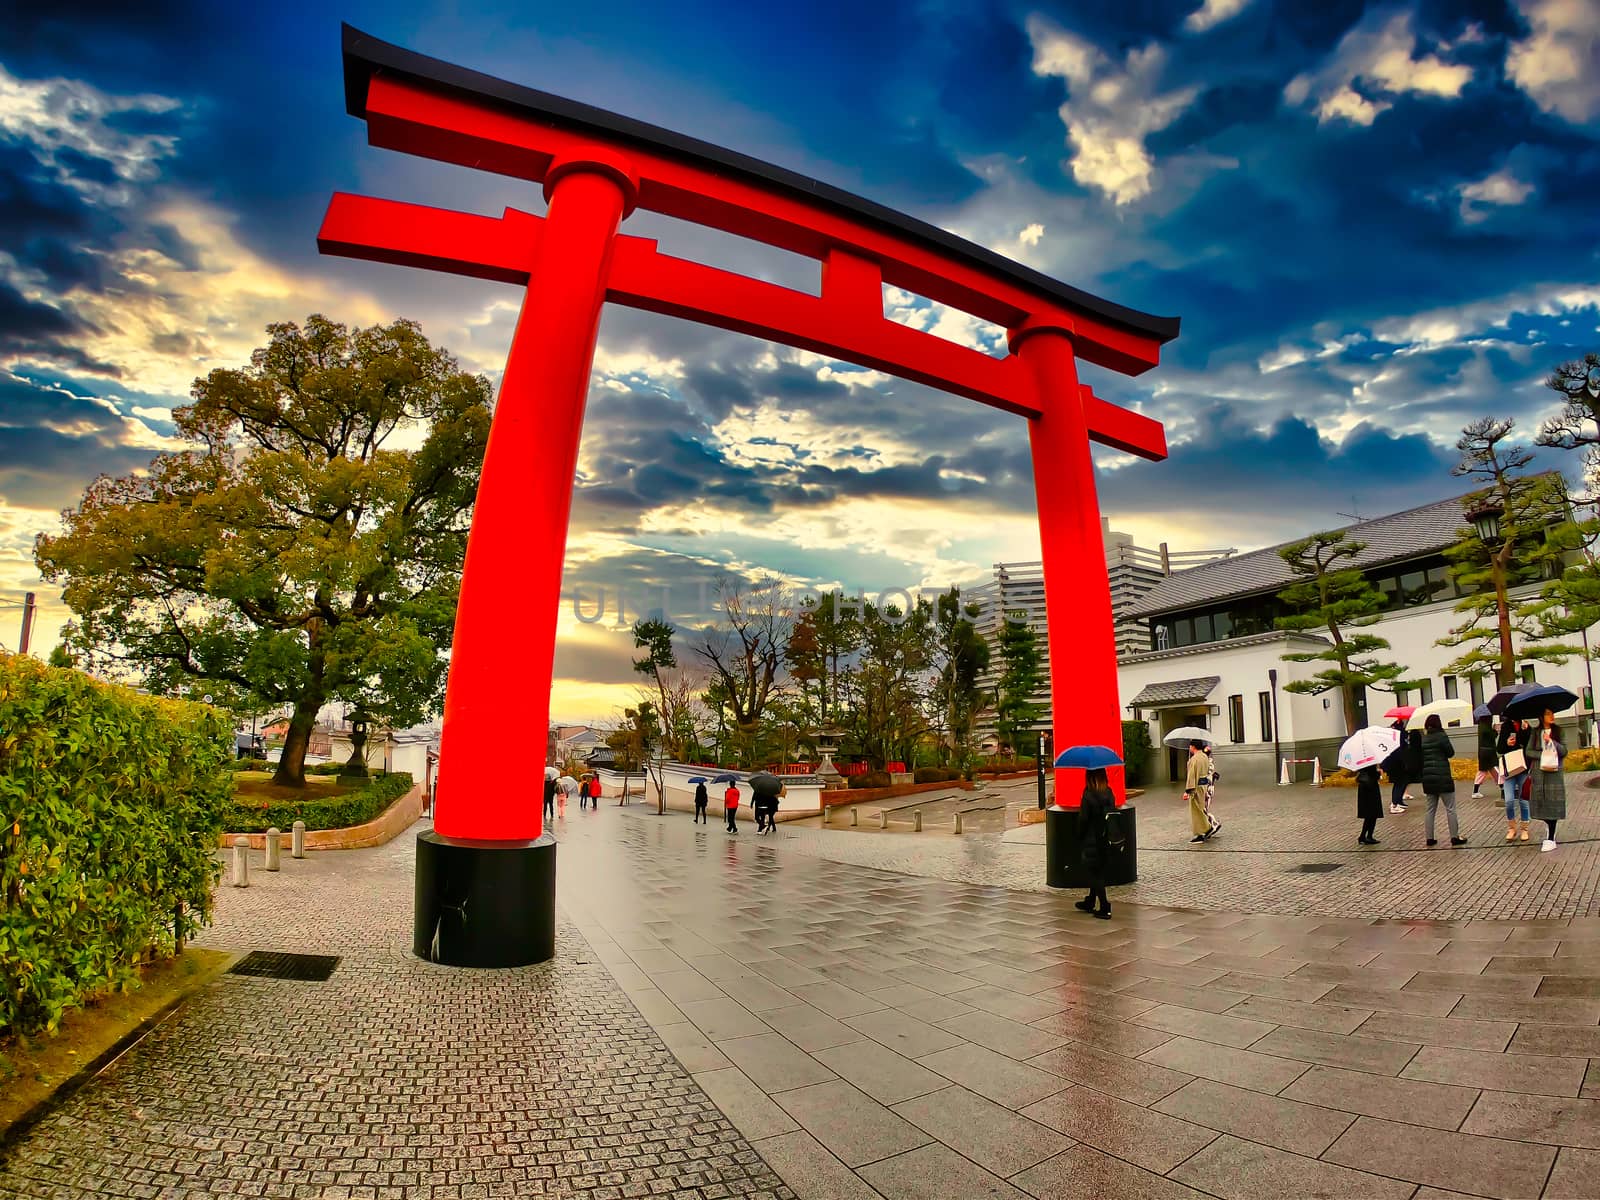 The beautiful gate of kyoto, japan.